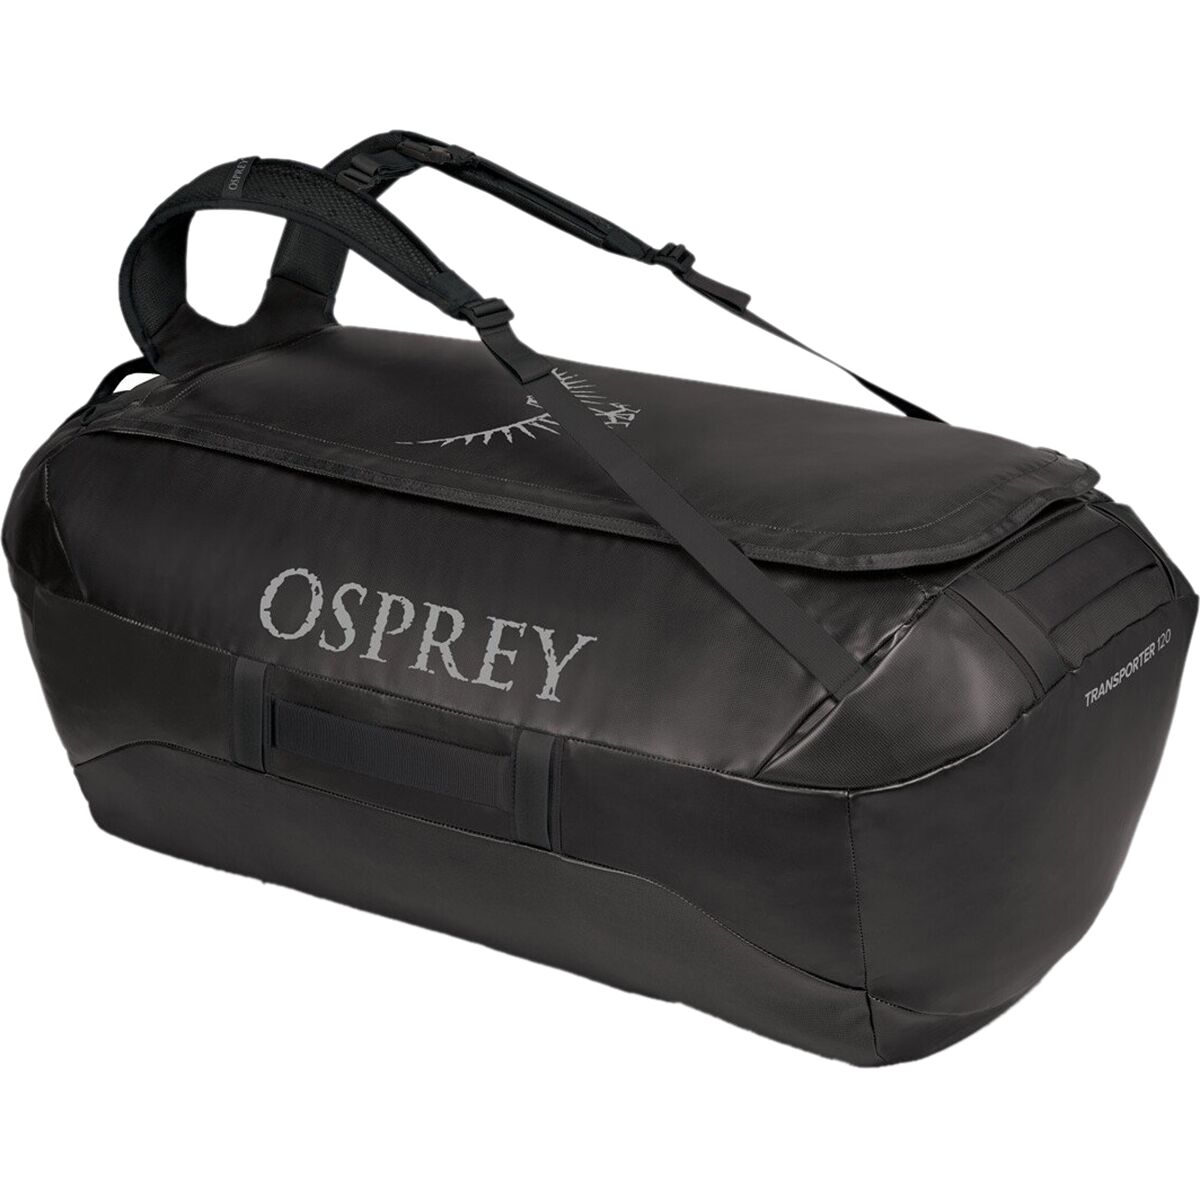 Osprey Packs Transporter 120L Duffel